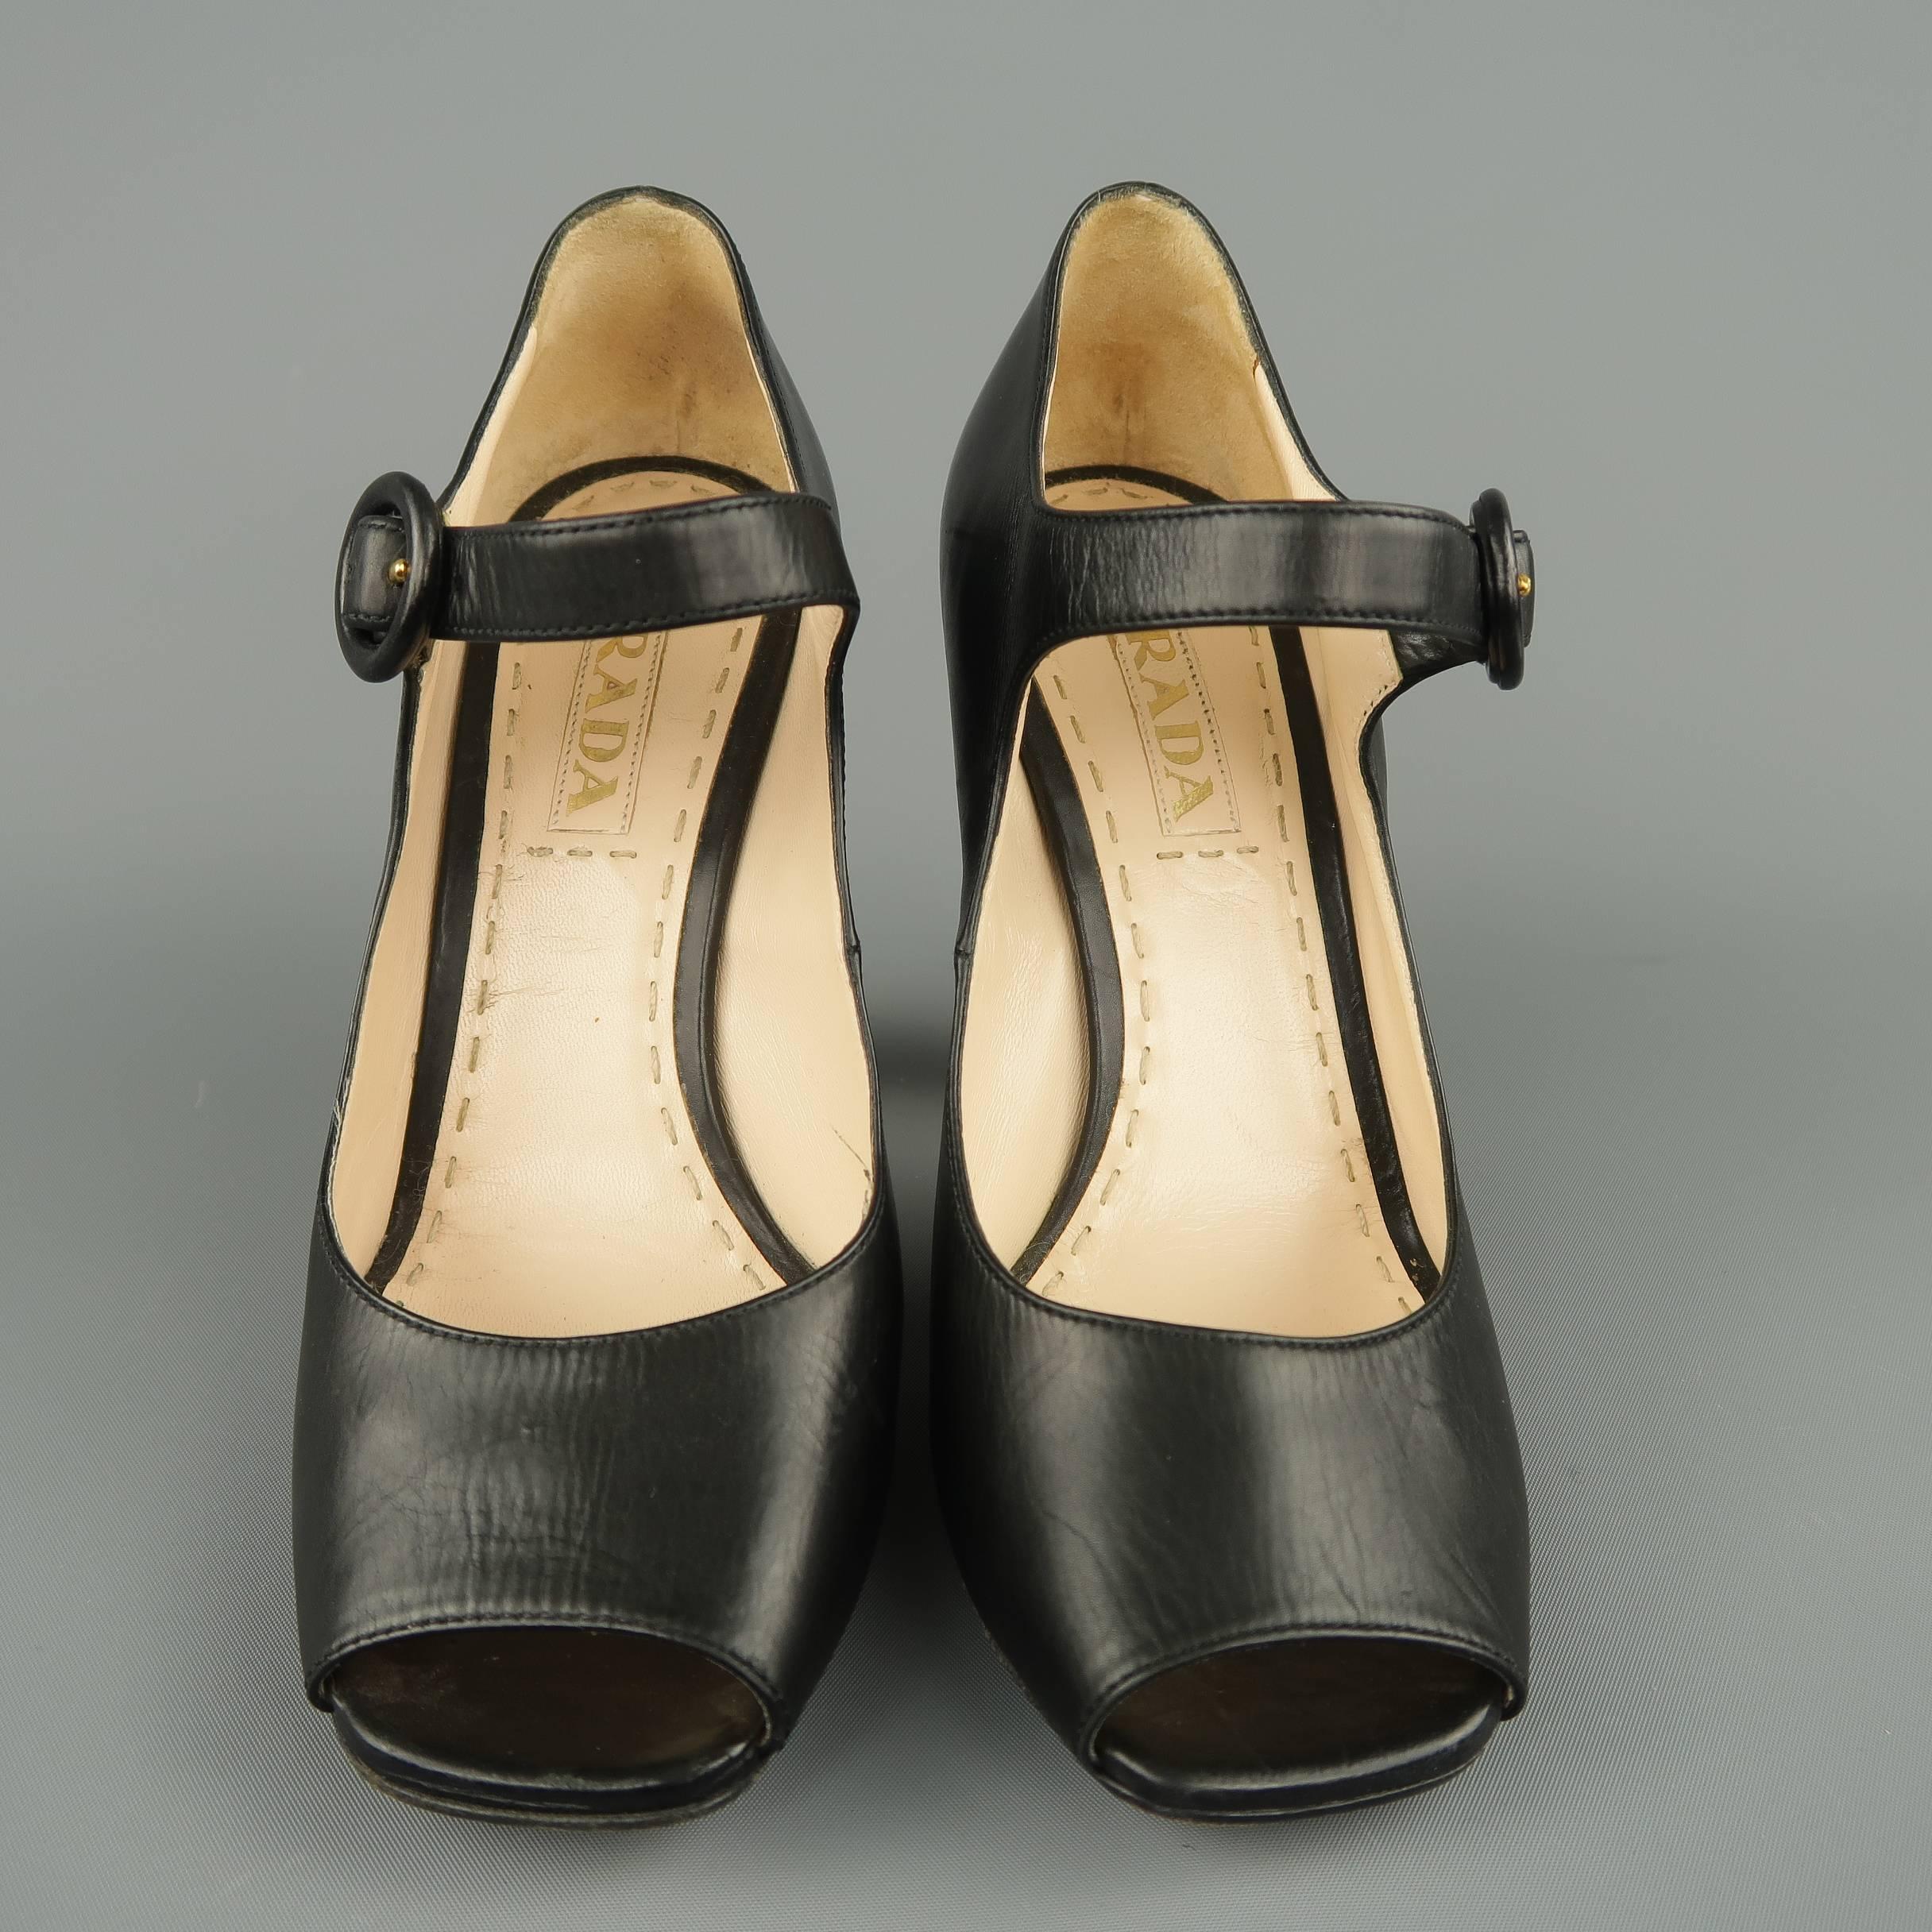 PRADA Size 7.5 Black Leather Mary Jane Peep Toe Pumps 1